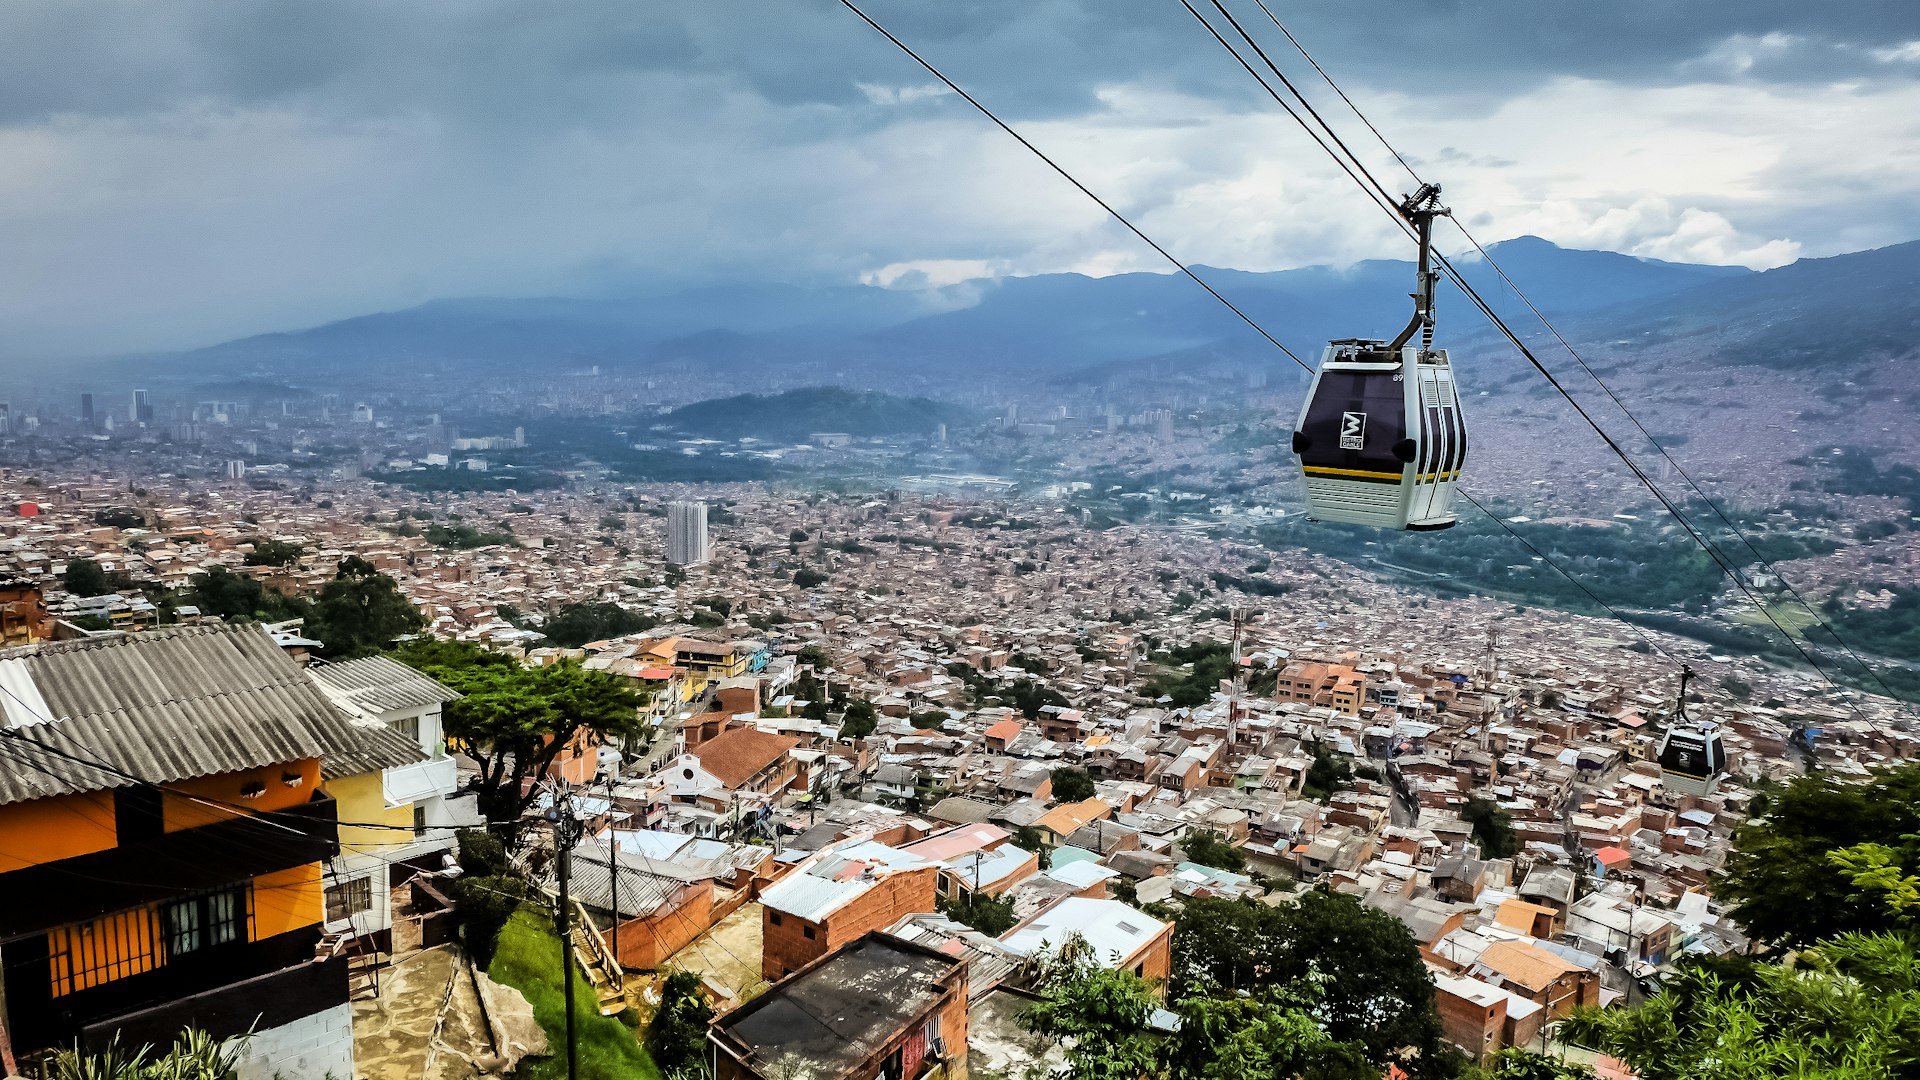 A public-transit gondola passes over hillside neighborhoods of Medellín, Antioquia, Colombia